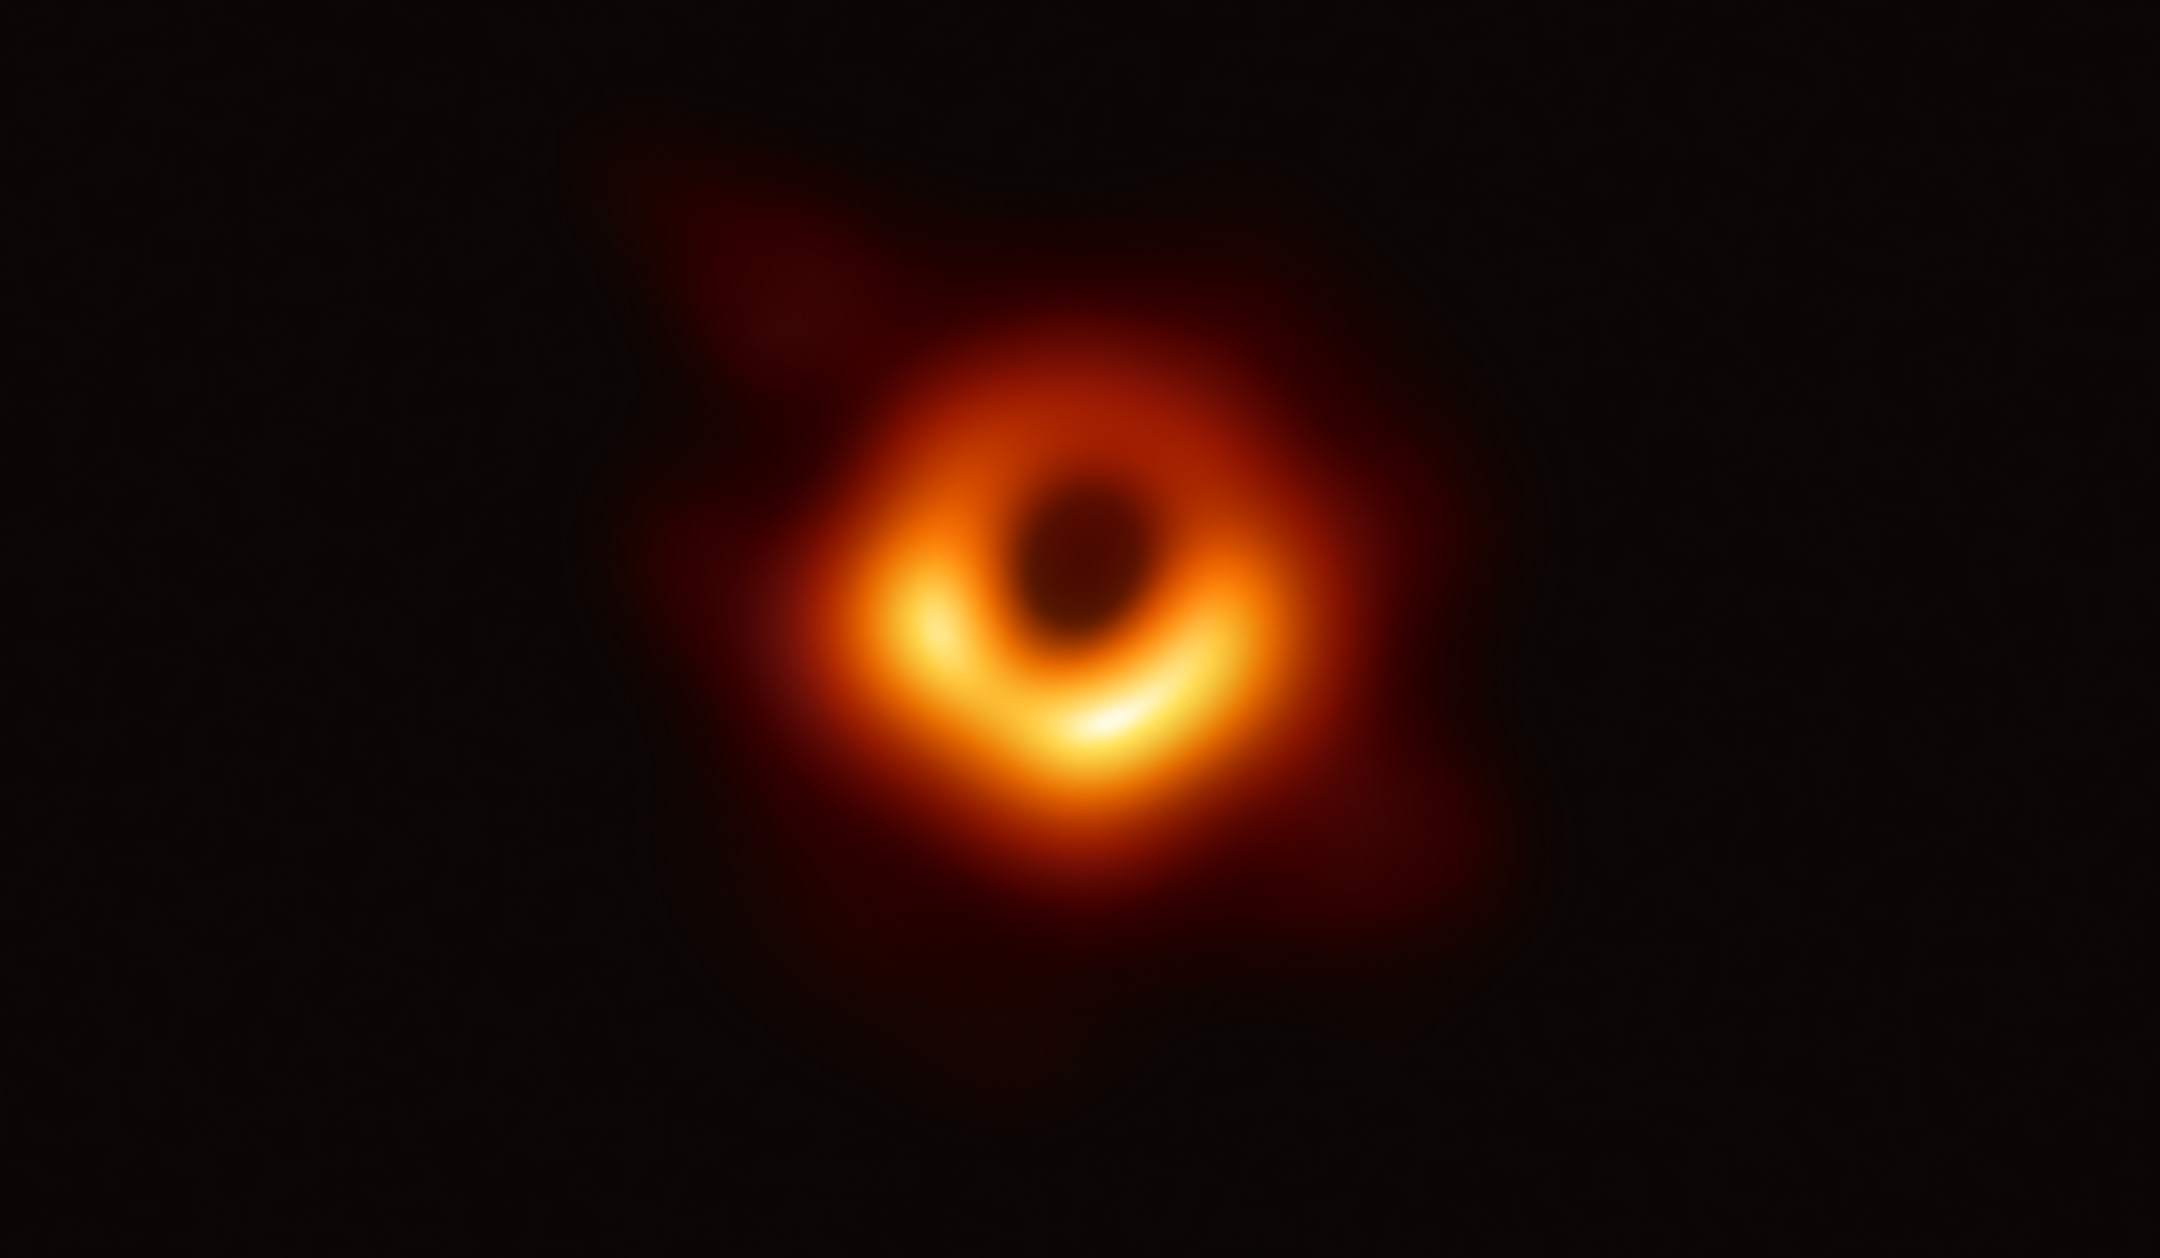 A black hole – Event Horizon Collaboration